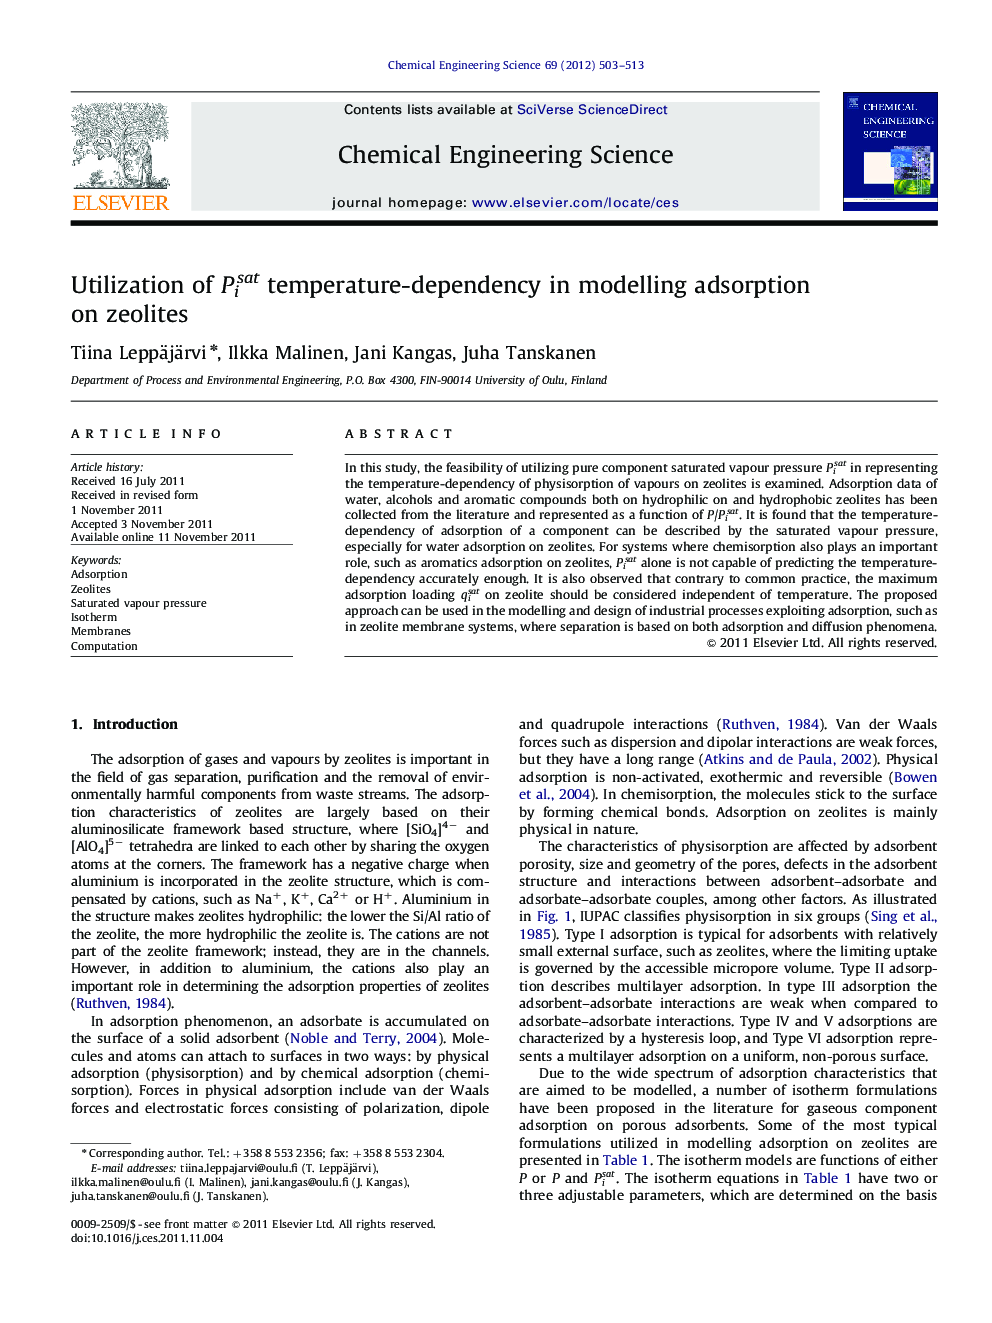 Utilization of Pisat temperature-dependency in modelling adsorption on zeolites